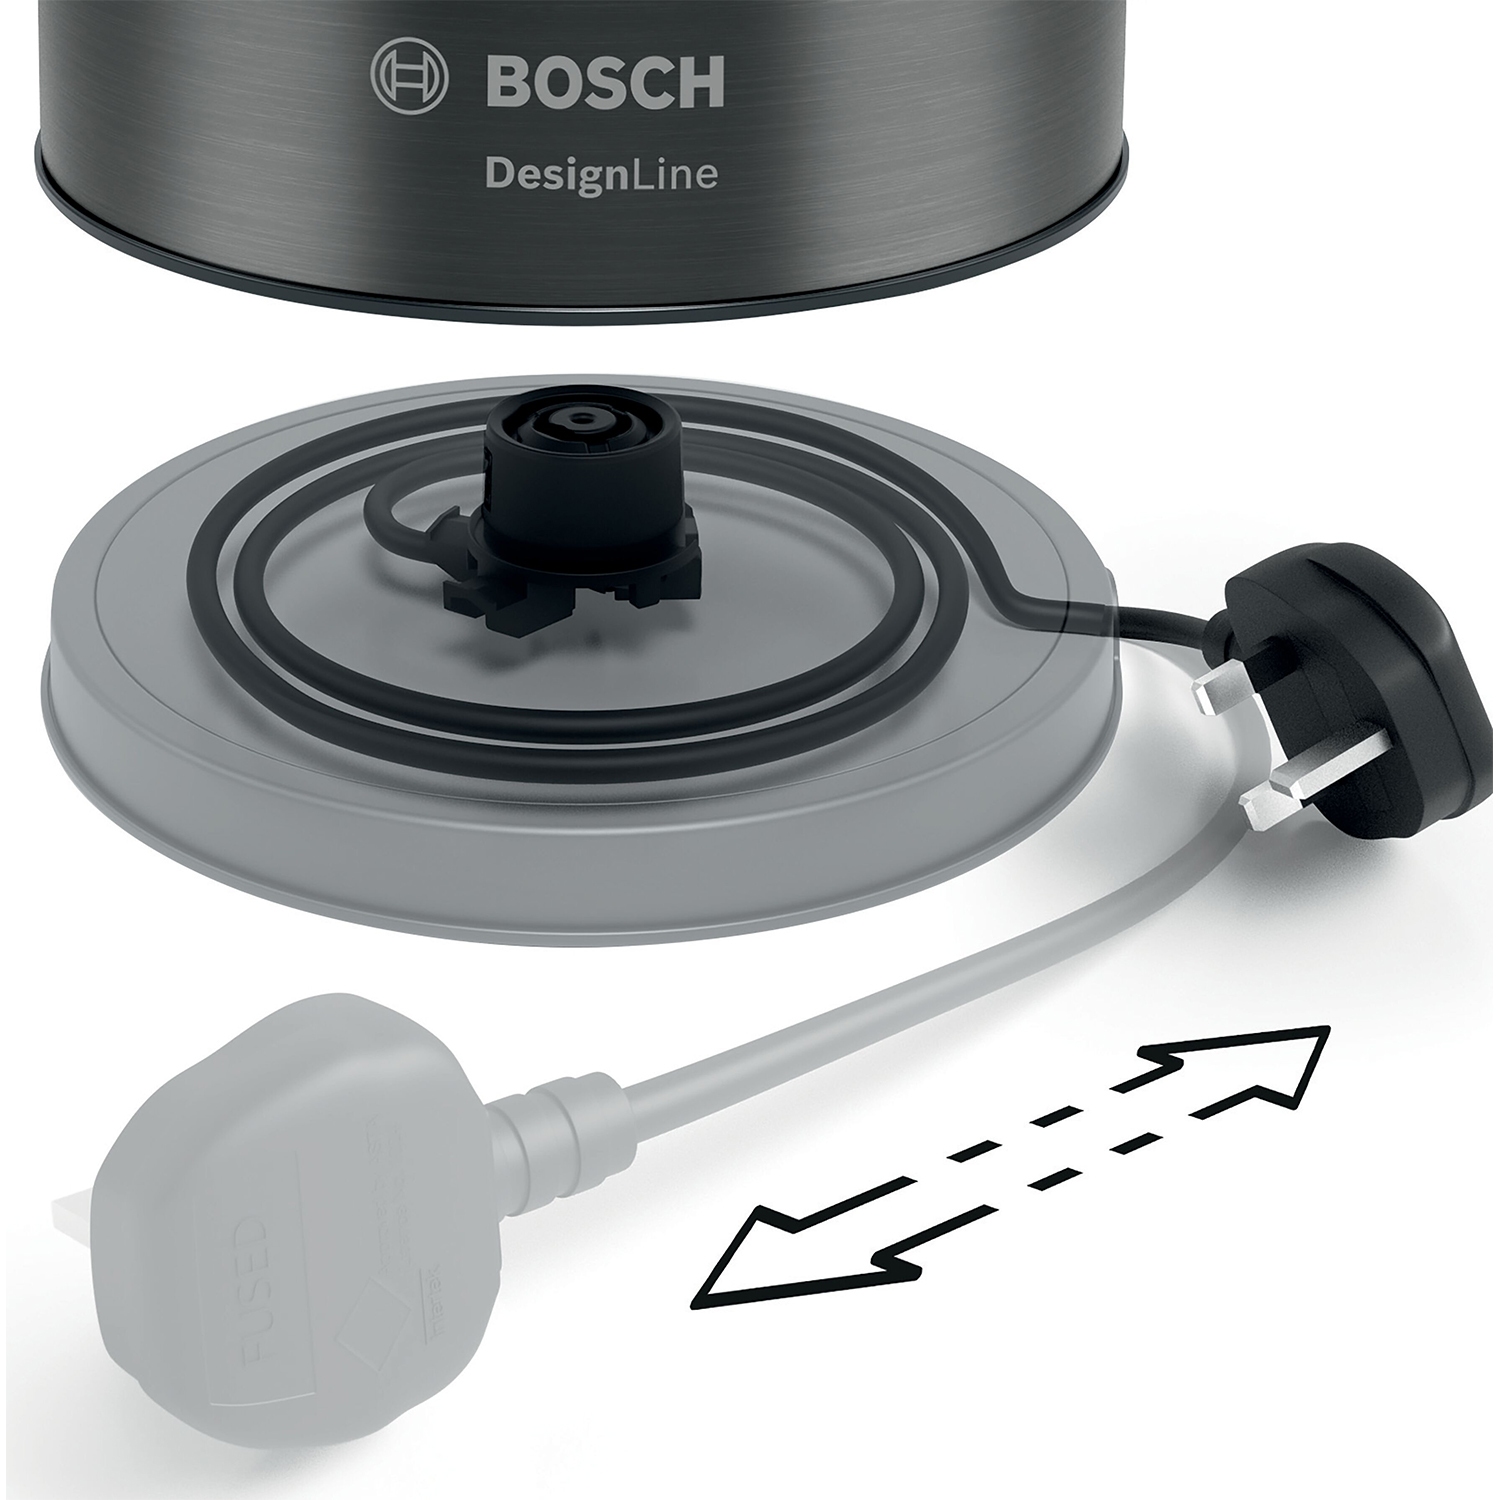 Bosch TWK5P475GB 1.7L Jug Kettle - Anthracite - 2